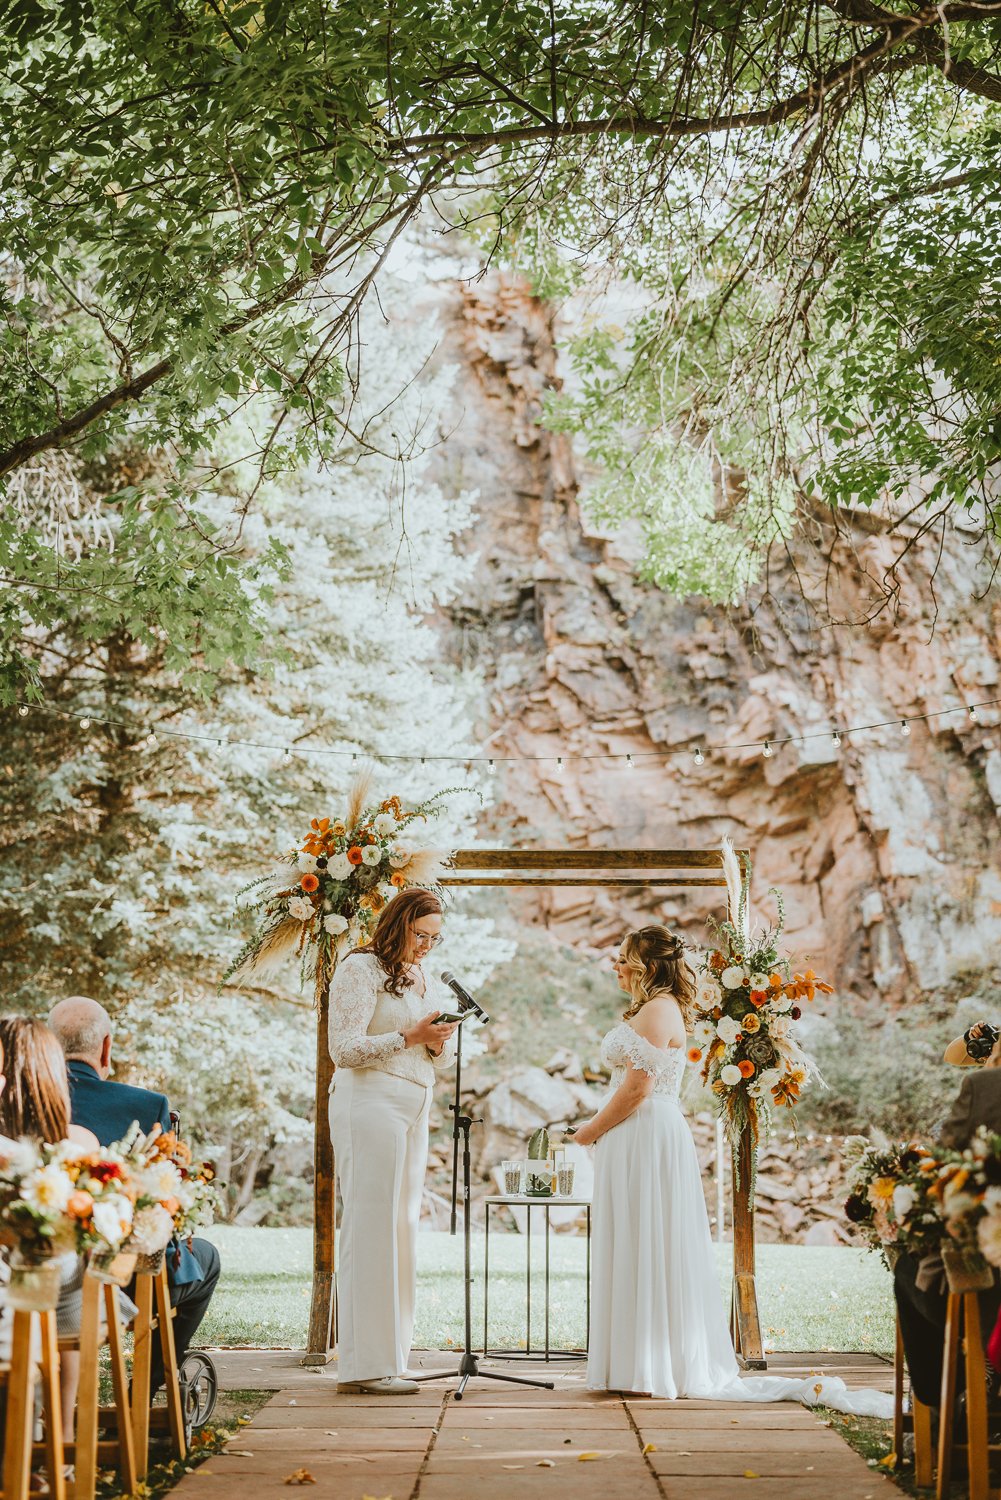 Plume&Furrow-Wedding-FLorist-Kennedy&Jena-IvyBencheckPortraits-River-Bend-LGBTQ-September-Colorado-Ceremony-Decor-Canyon-Walls.jpg